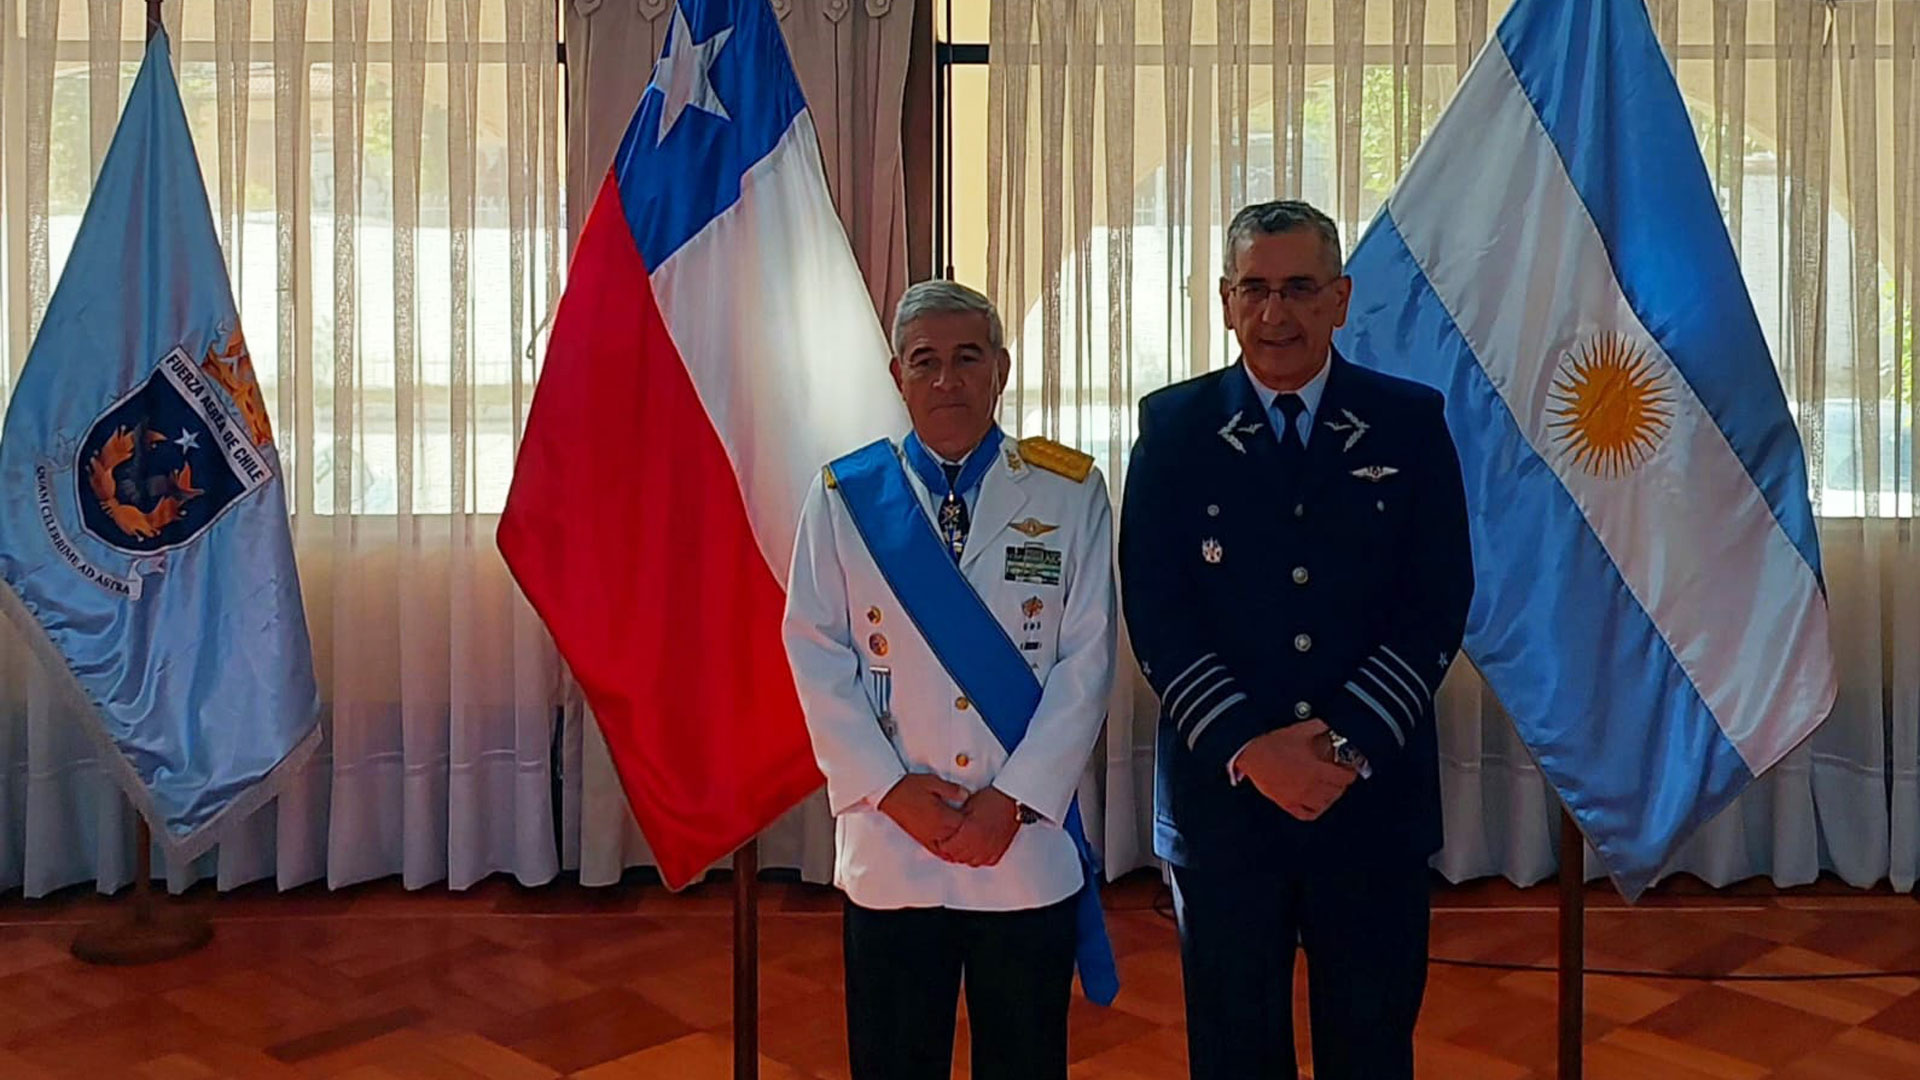 La Fuerza Aérea de Chile condecoró al titular de la Fuerza Aérea Argentina